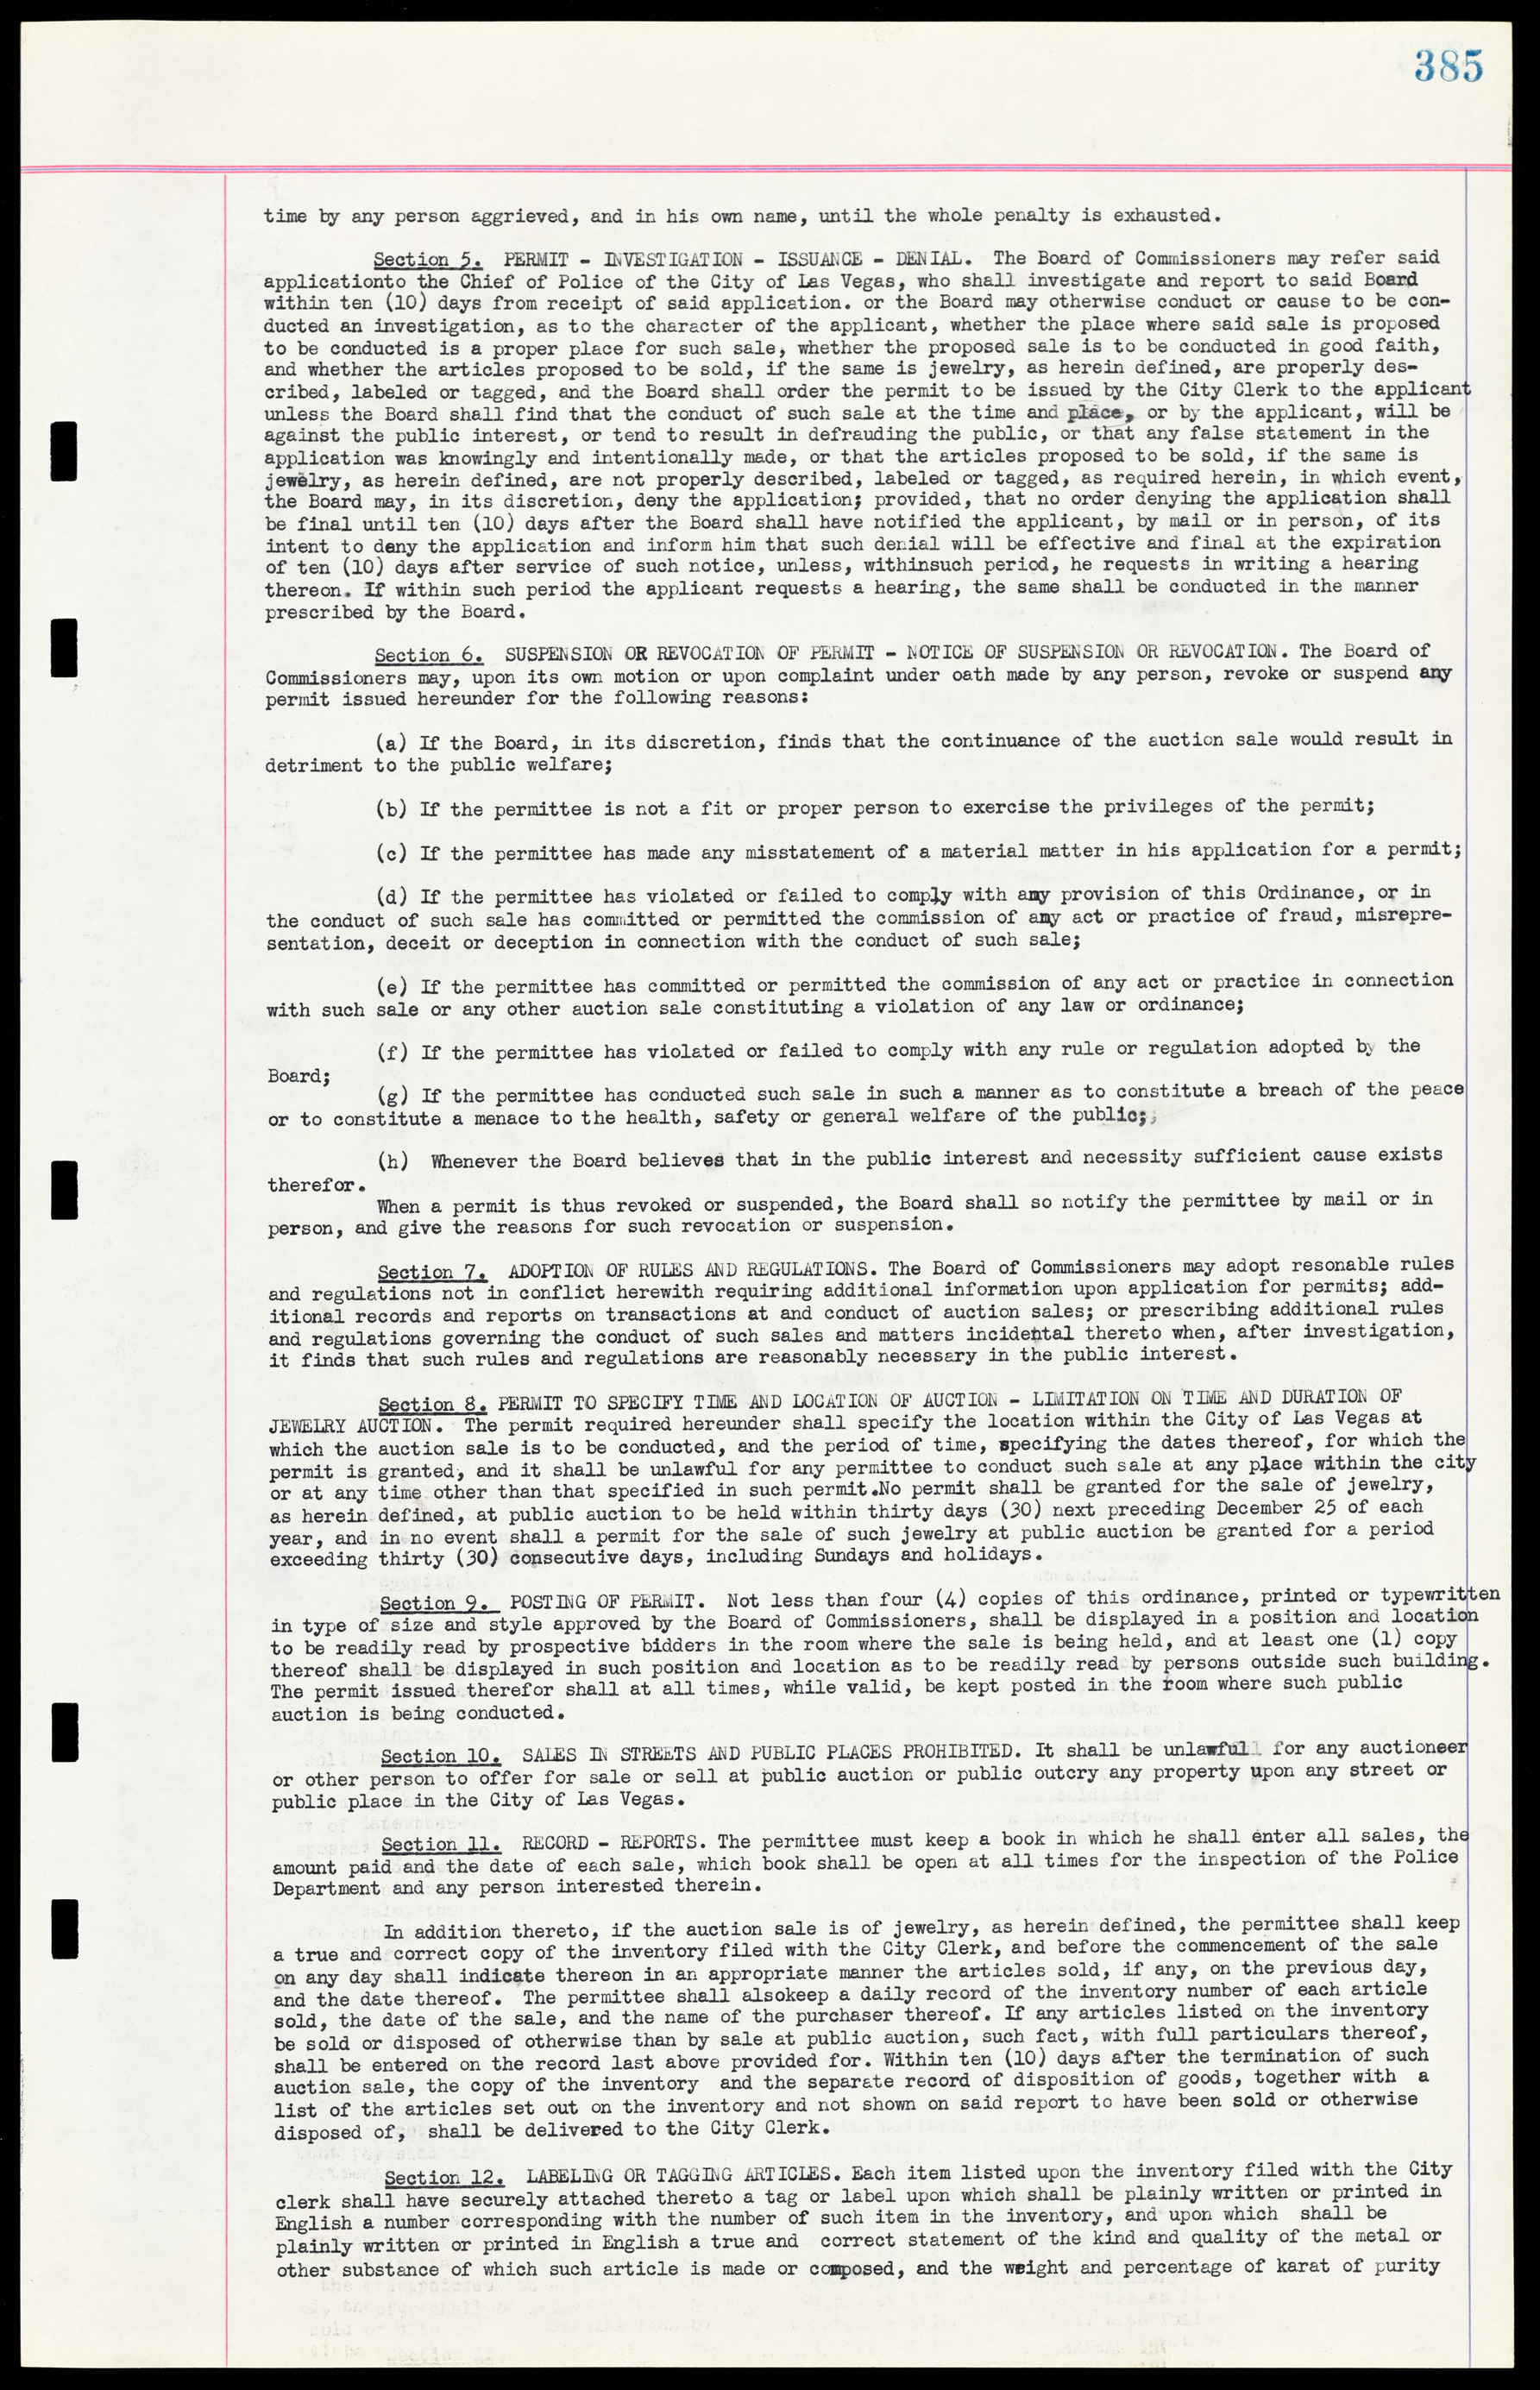 Las Vegas City Ordinances, March 31, 1933 to October 25, 1950, lvc000014-414